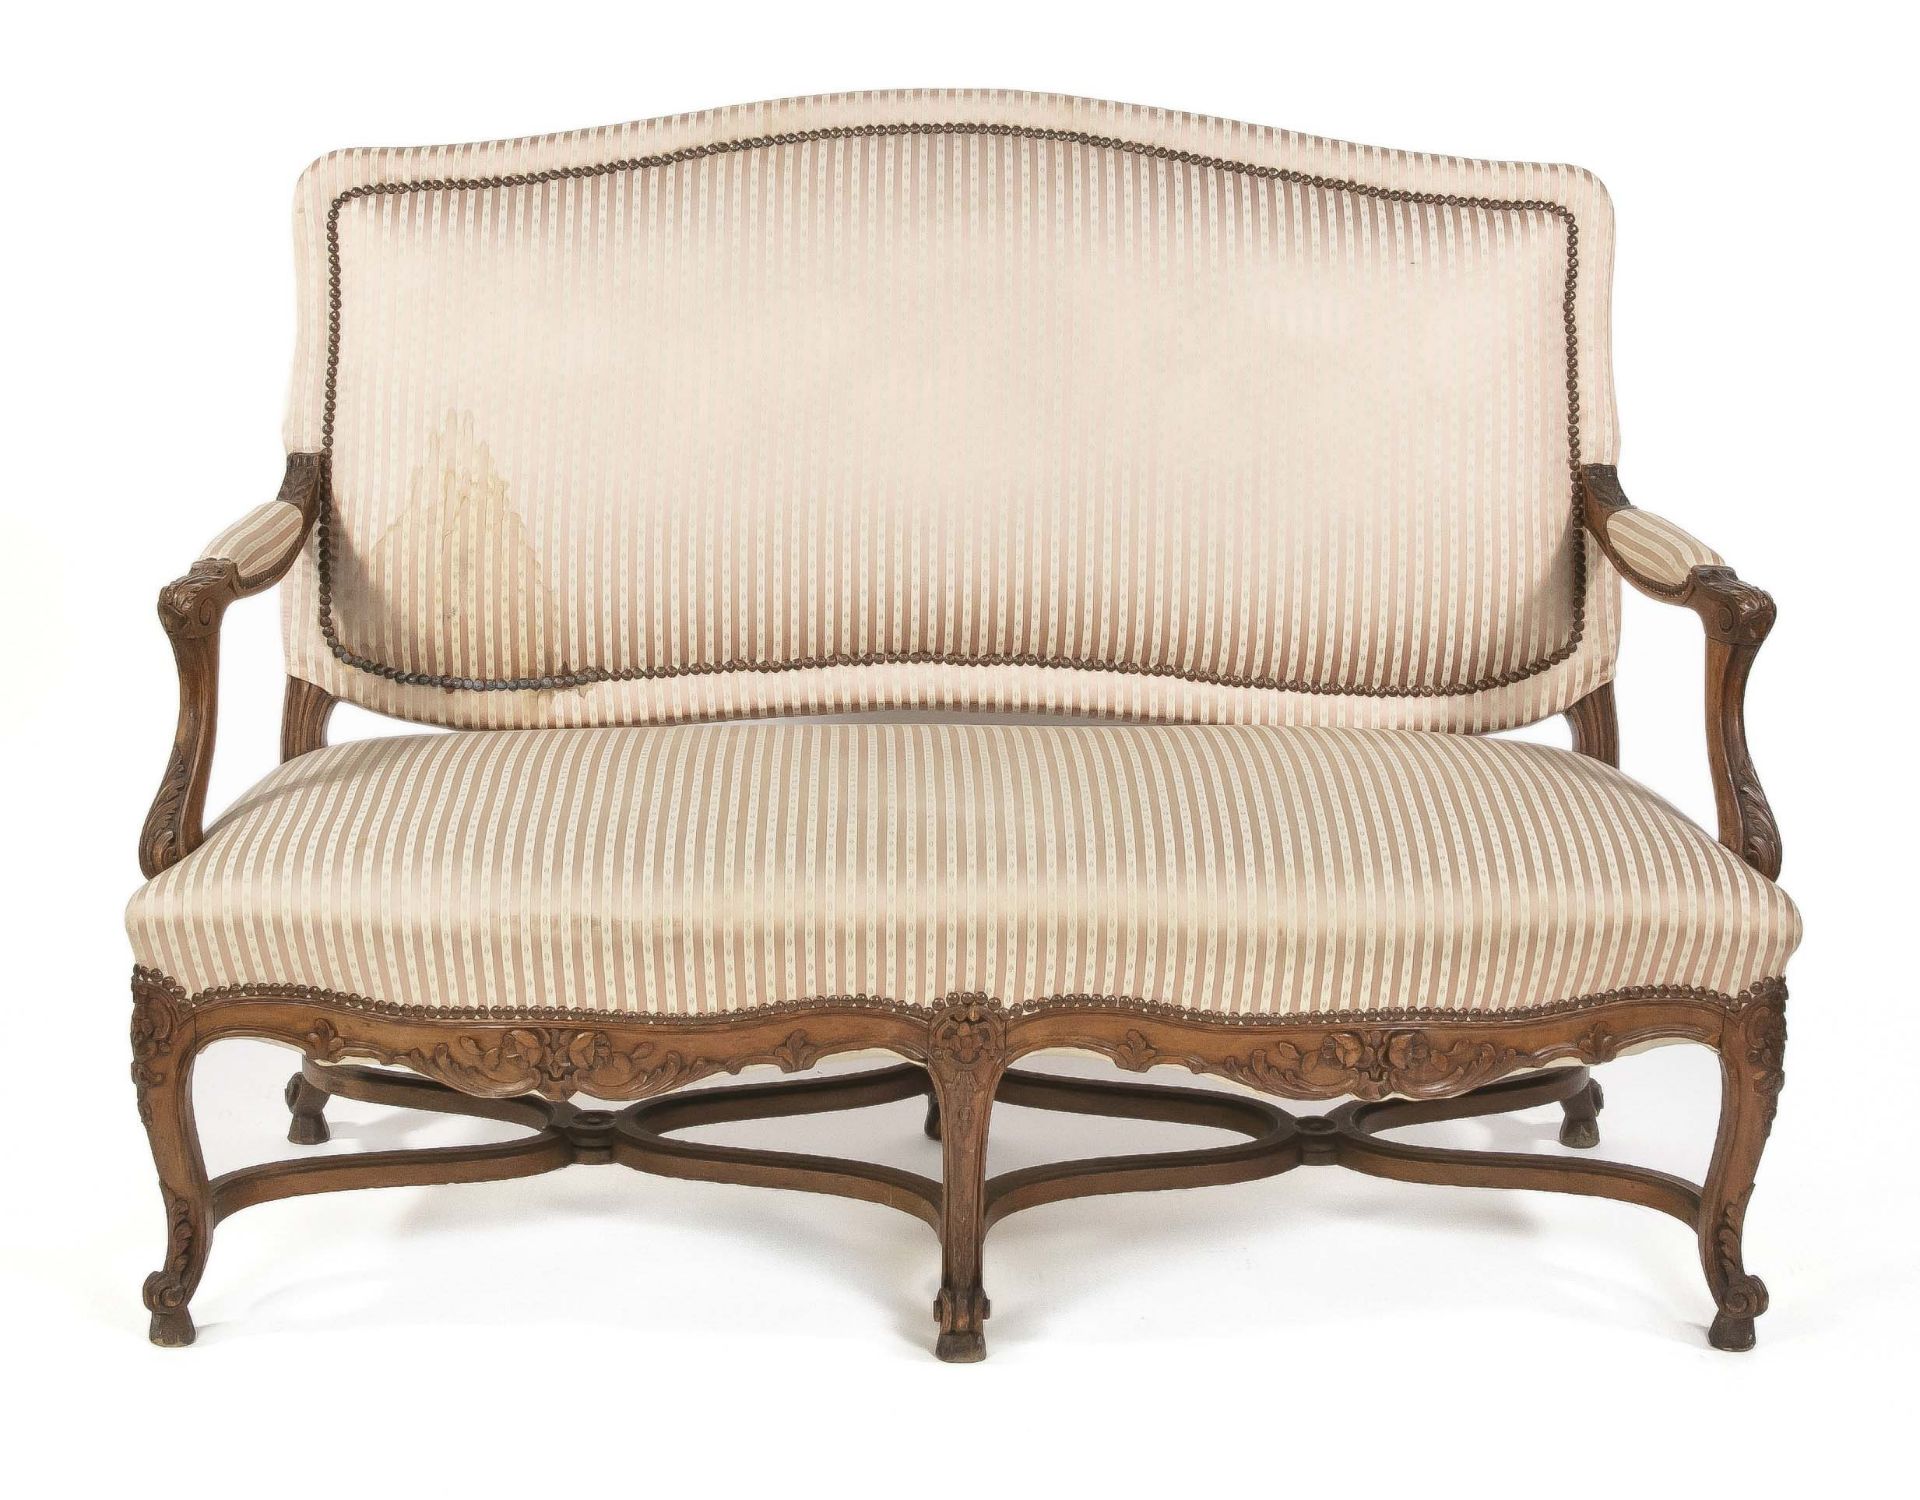 Neo-Rococo sofa circa 1860, solid walnut, matching lot 5517, 102 x 140 x 80 cm.- The furniture